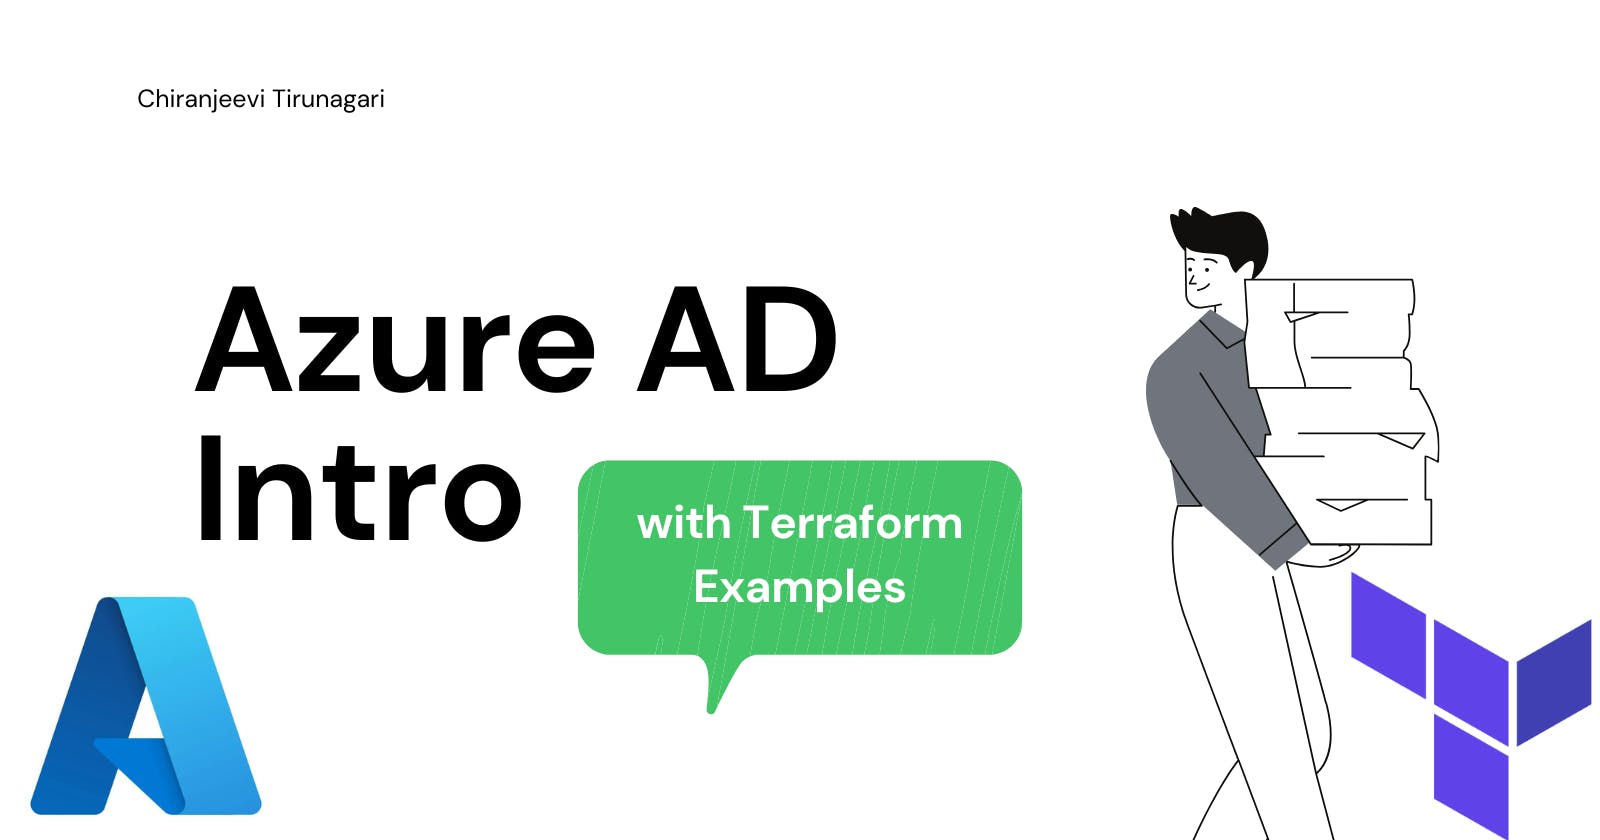 Azure AD intro with Terraform examples